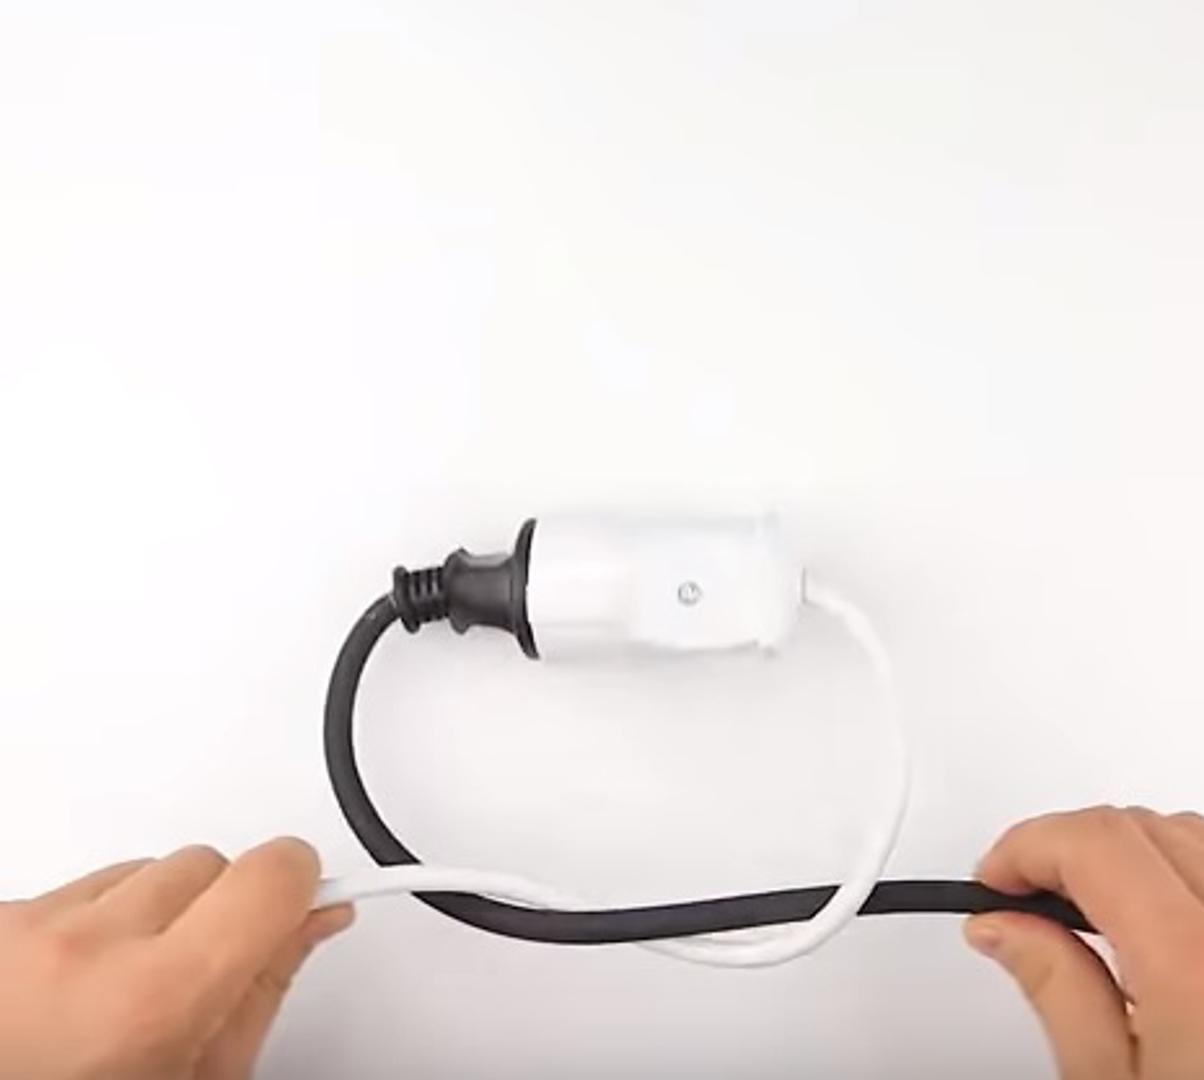 Često vam se dogodi da vam se kabel iščupa iz utičnice? Spriječite to tako da napravite ovo prikazano na fotografiji. 